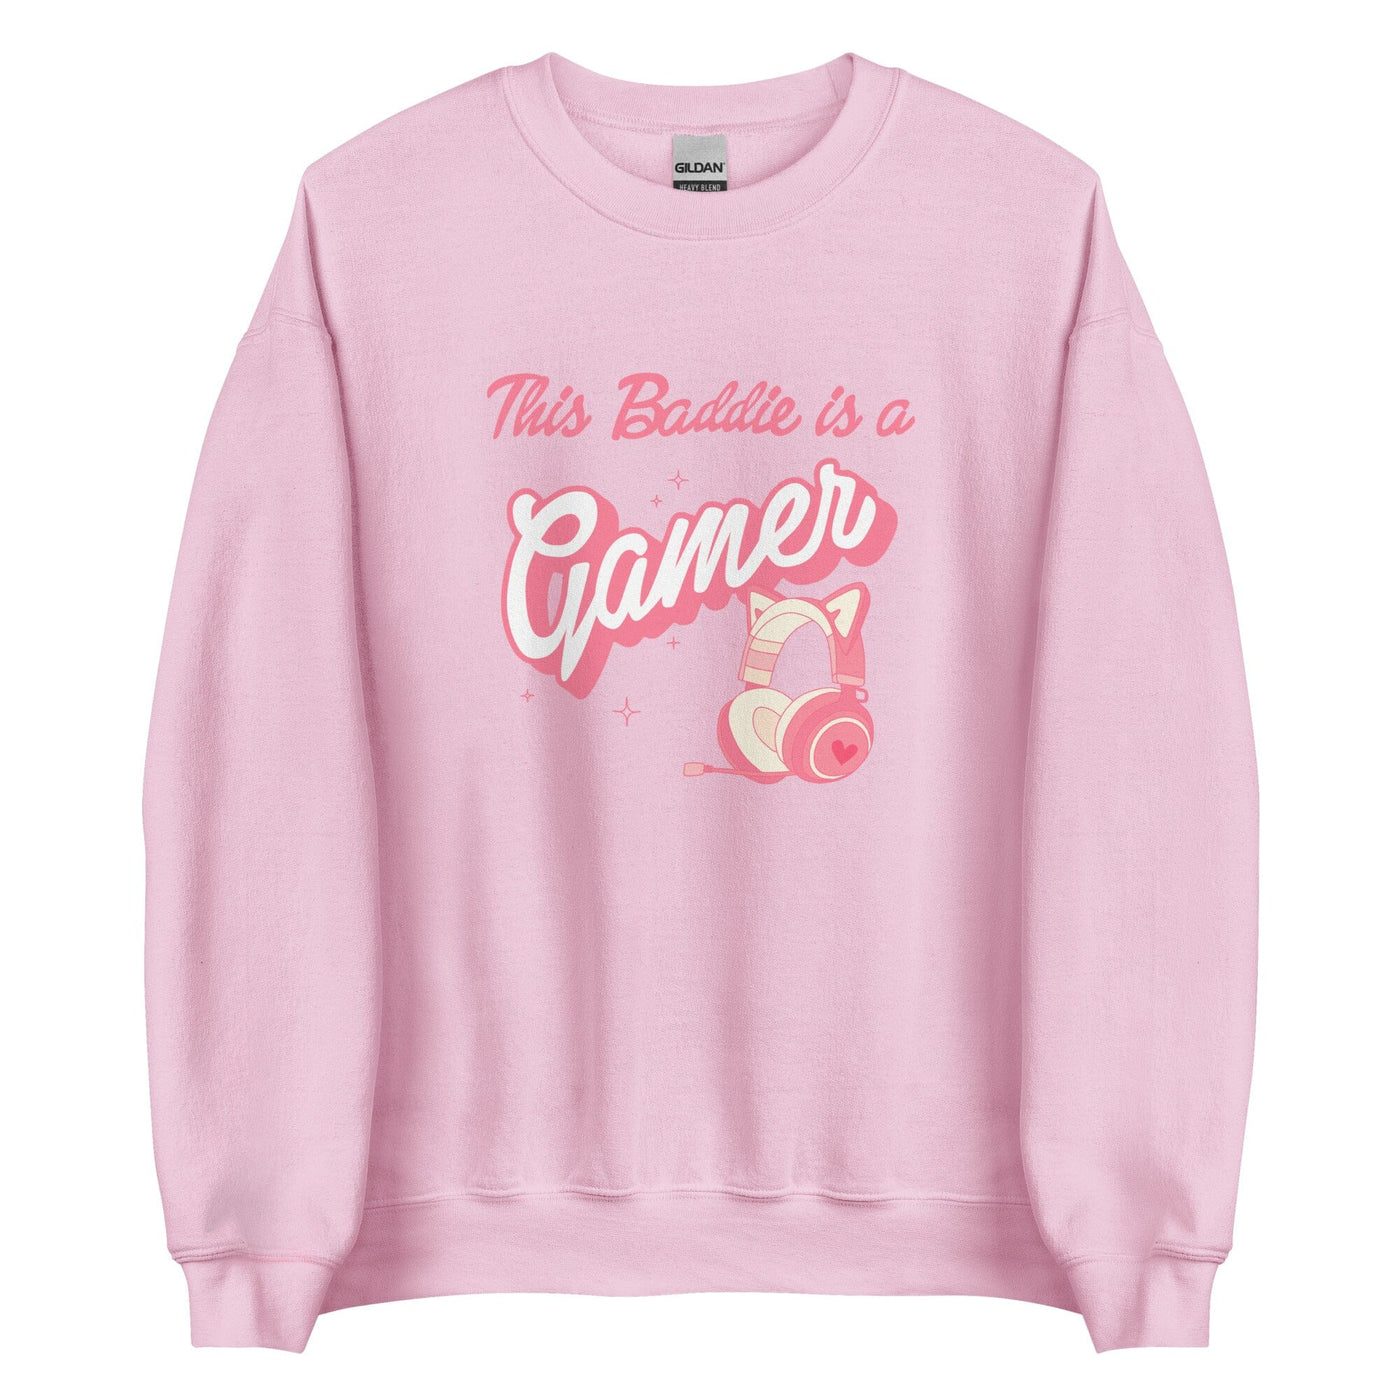 This Baddie is a Gamer | Unisex Sweatshirt | Feminist Gamer Threads & Thistles Inventory Light Pink (Girly Girl) S 